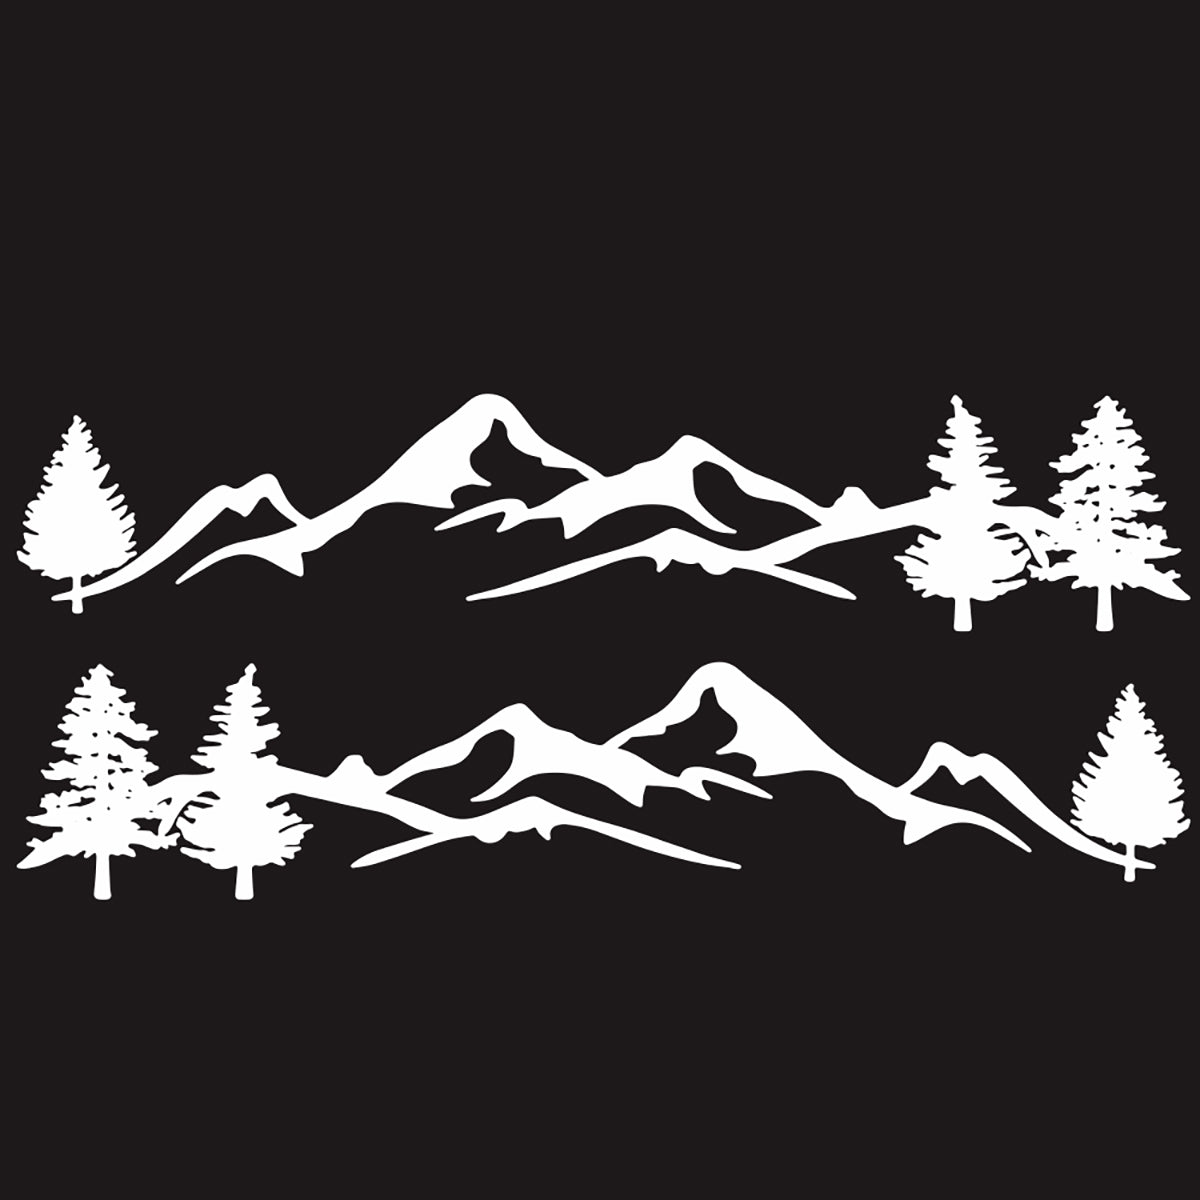 Snow 2pcs Side Body Stickers Decal Mountain & Tree For Camper Van Motorhome Car Caravan Boat